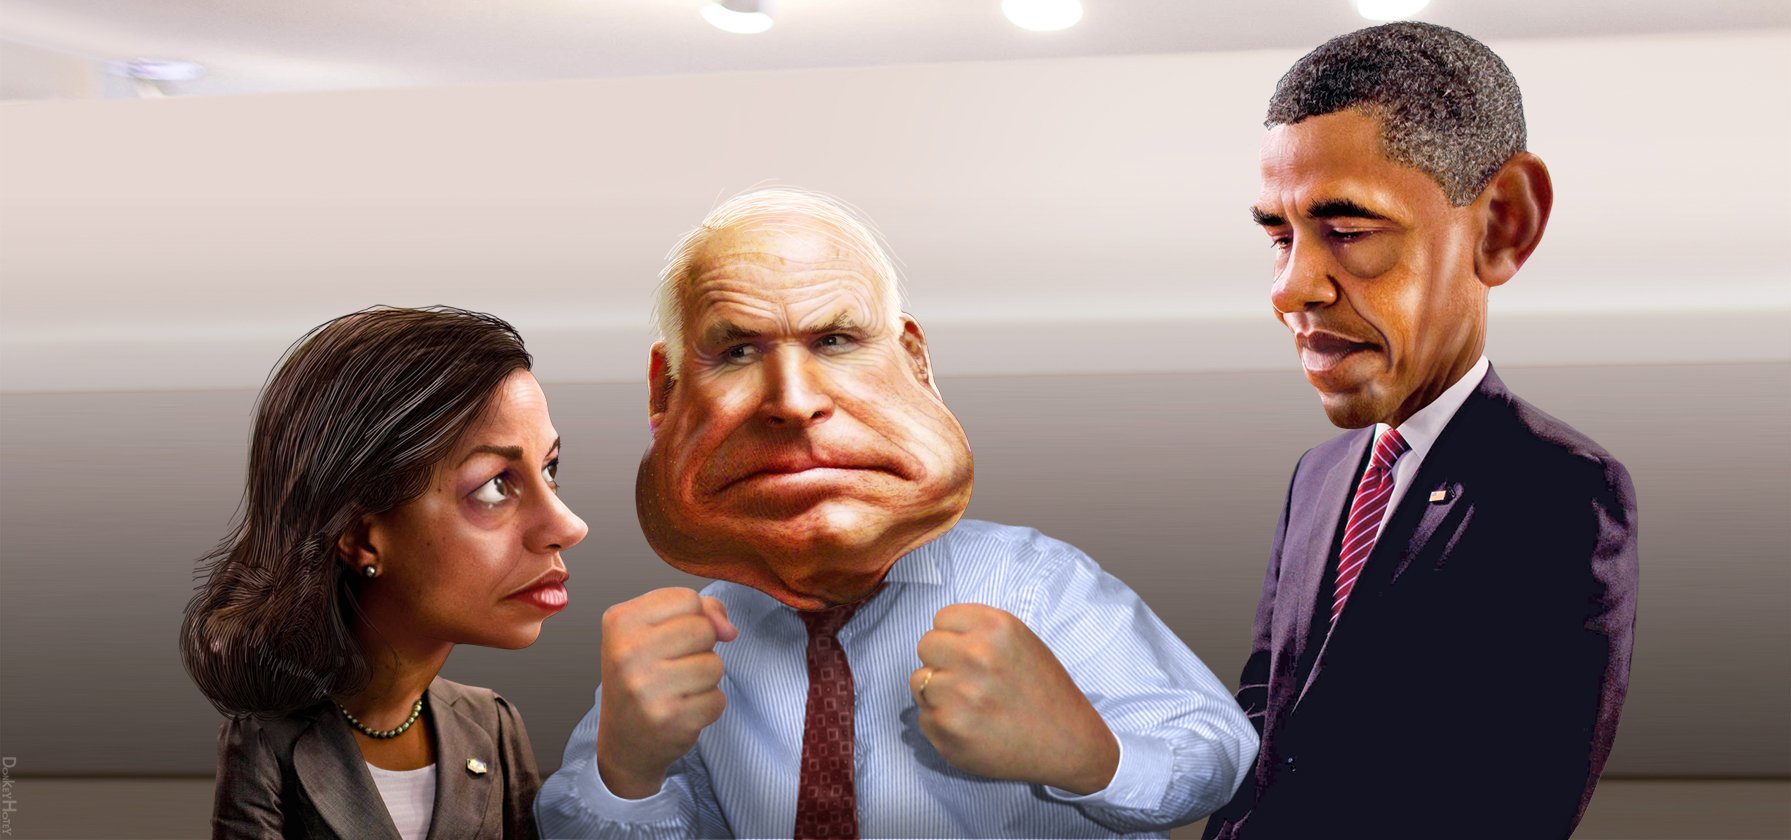 McCain_Teaches_Obama_Civility_Bipartisanship_1791x840.jpg